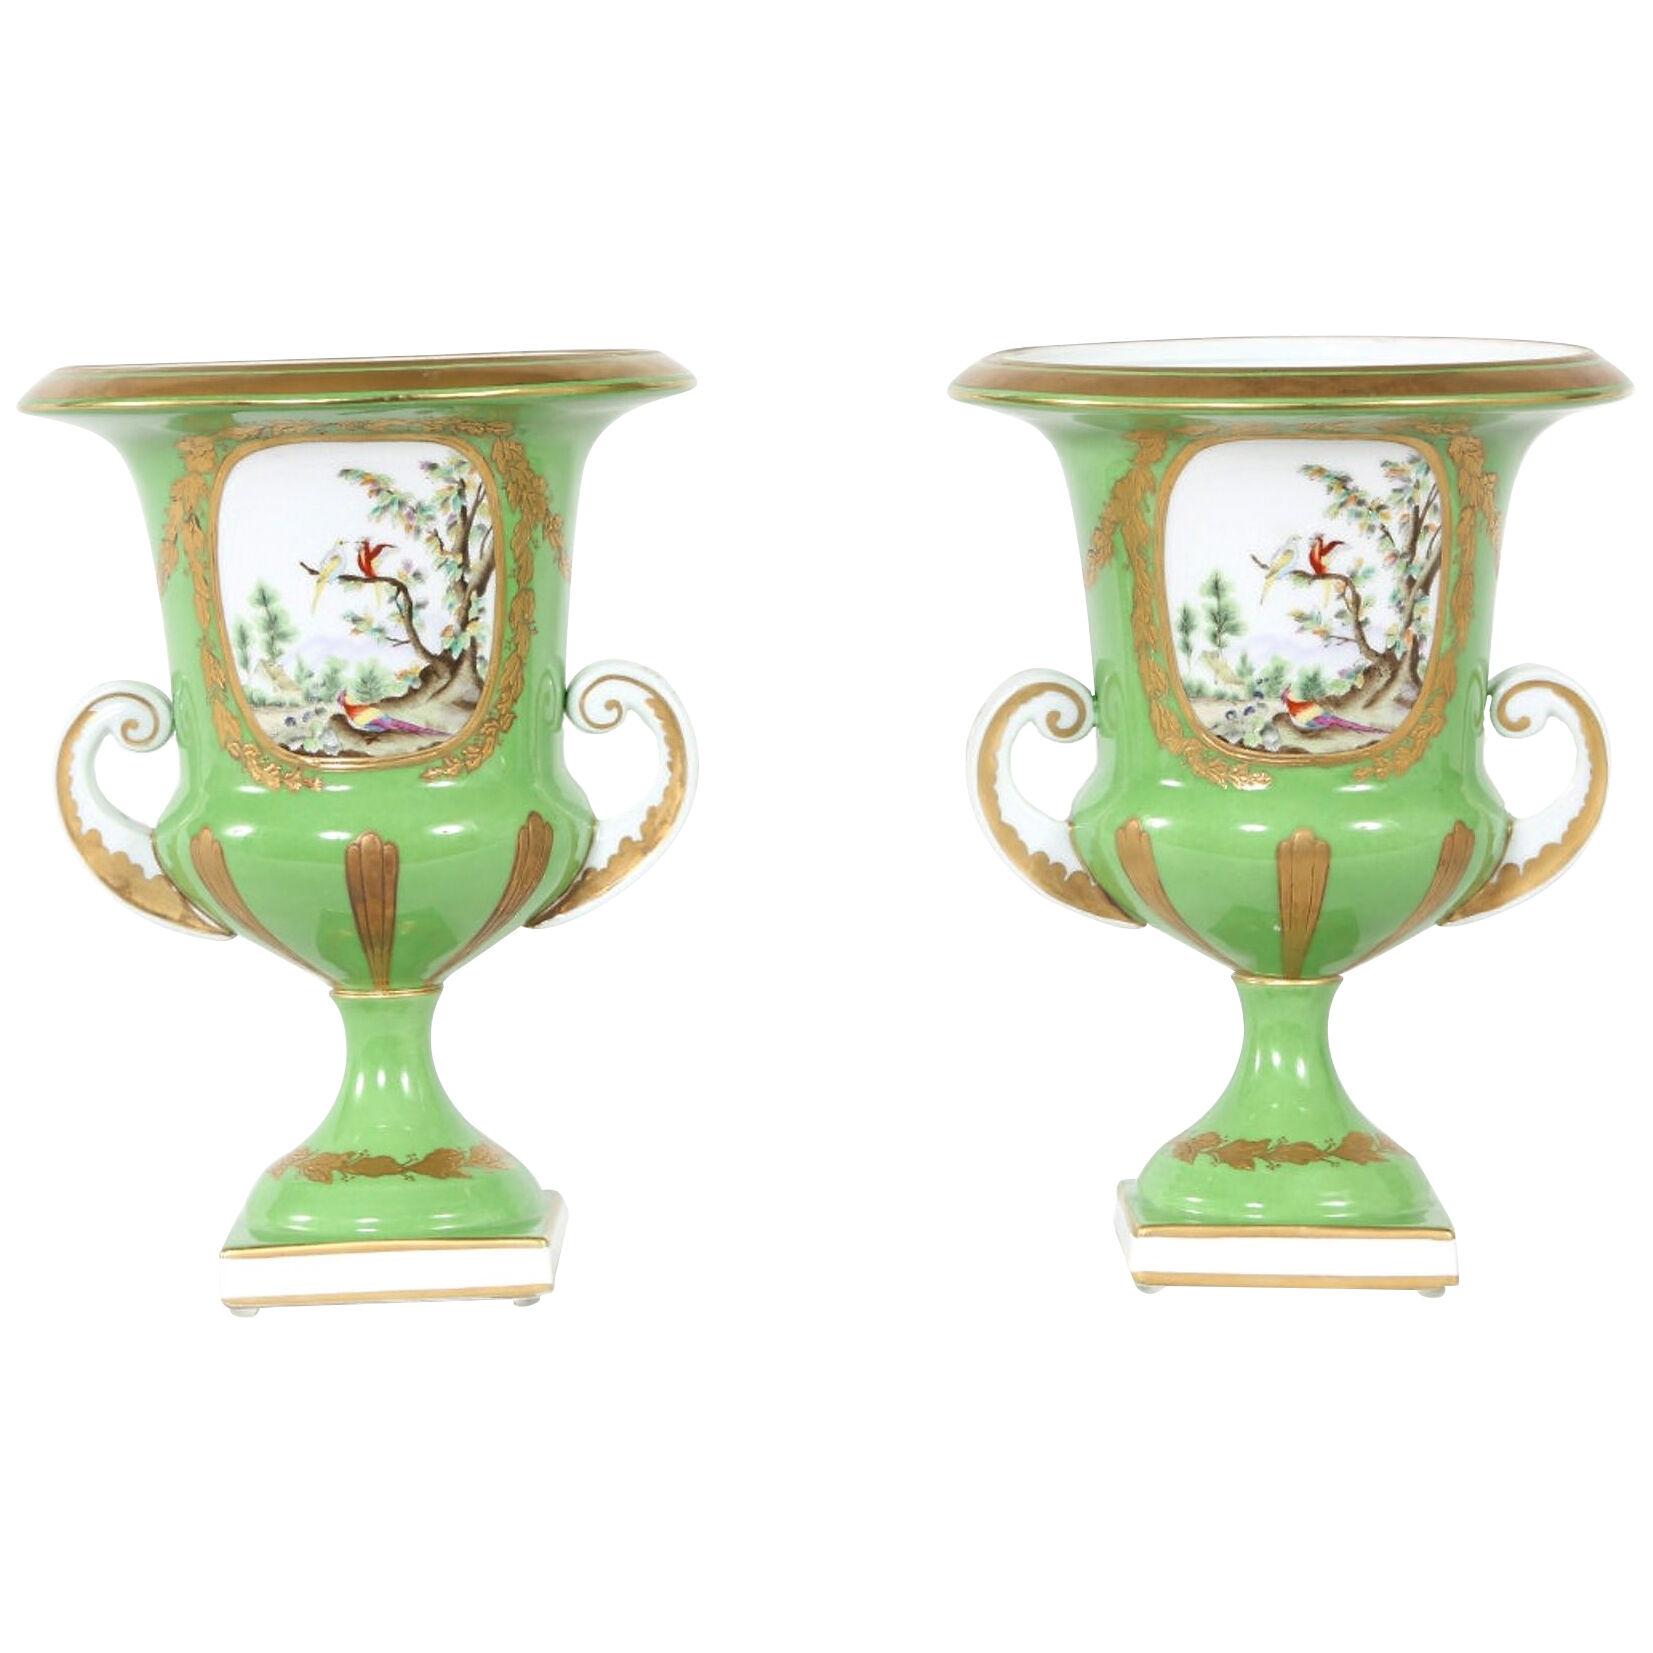 Pair of English Porcelain Floral Decorative Vases / Urns